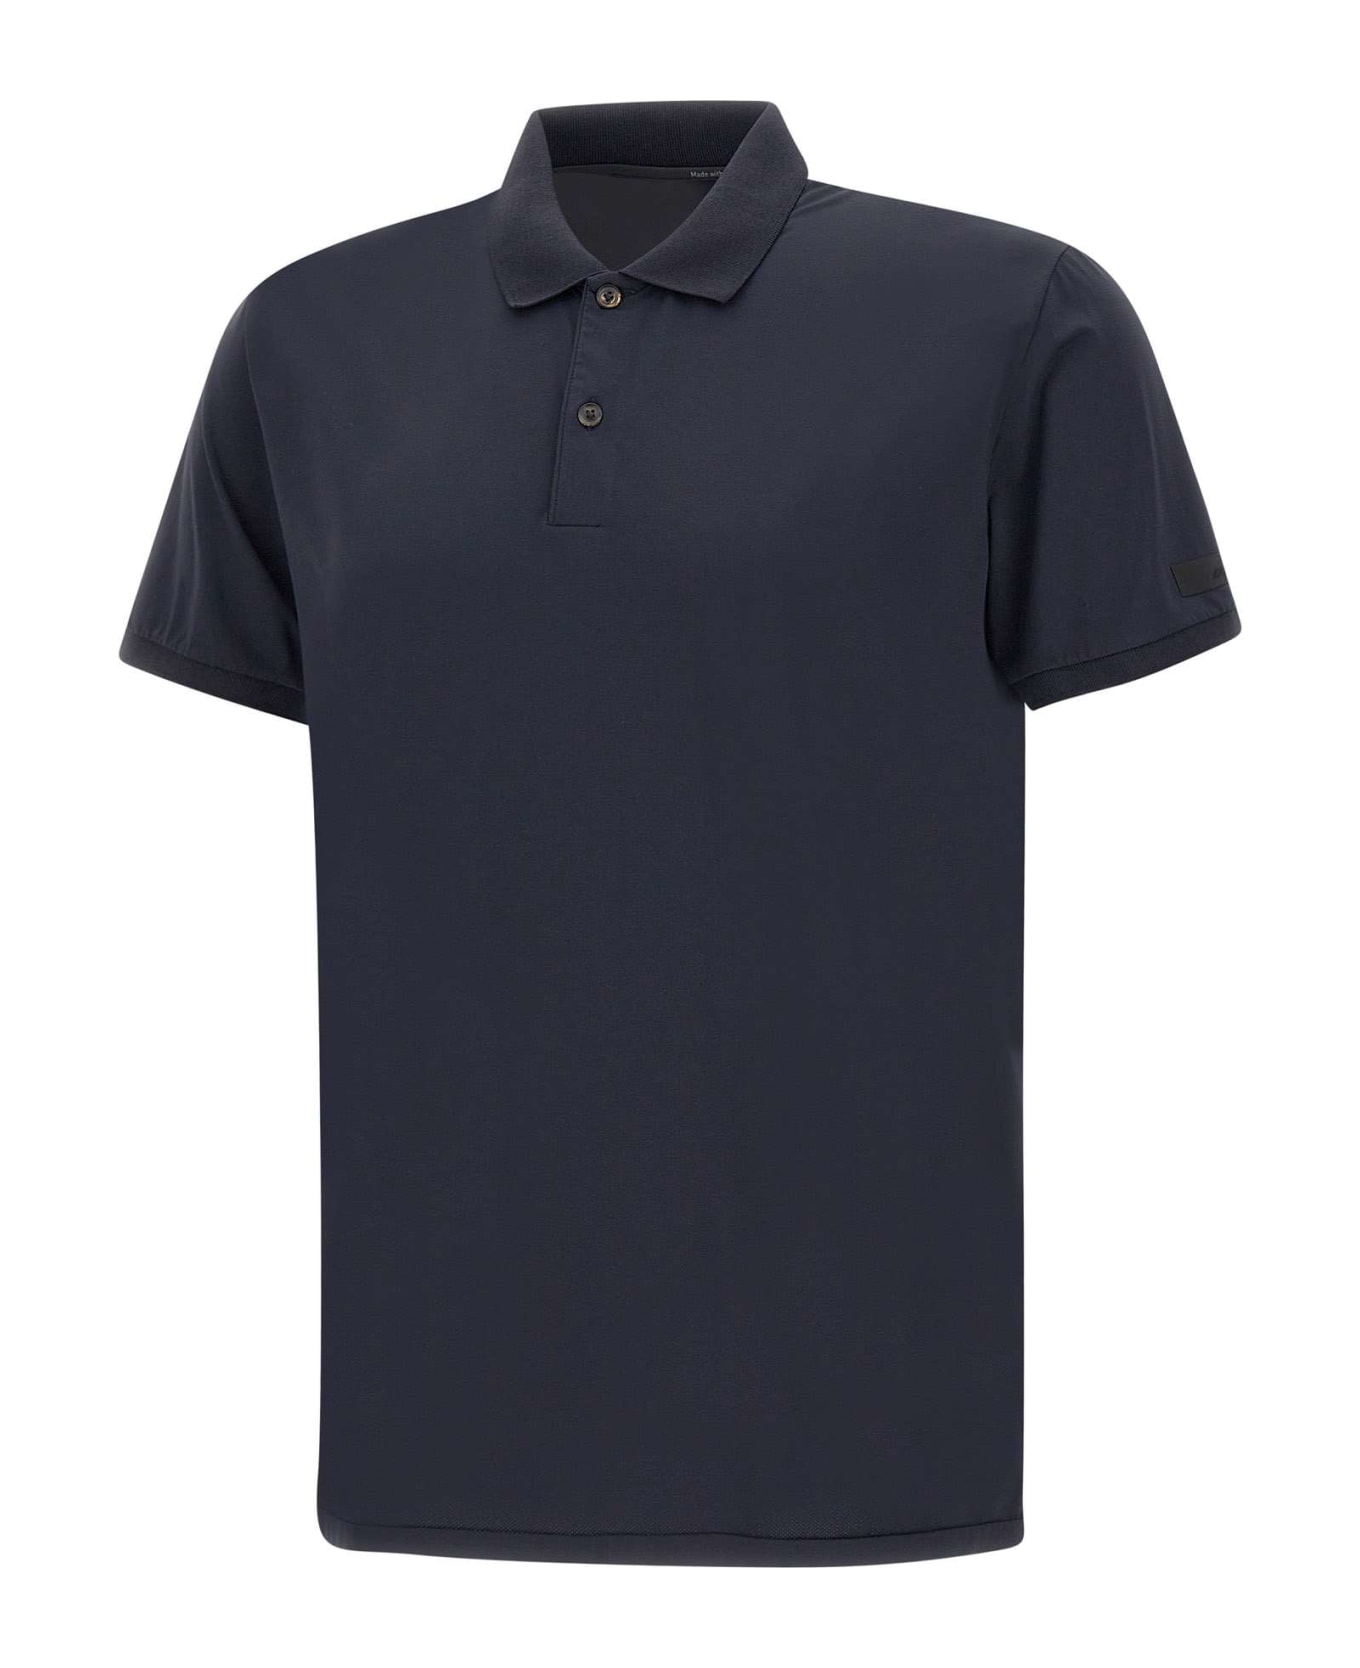 RRD - Roberto Ricci Design 'gdy' Cotton Oxford Polo Shirt - Blue Black